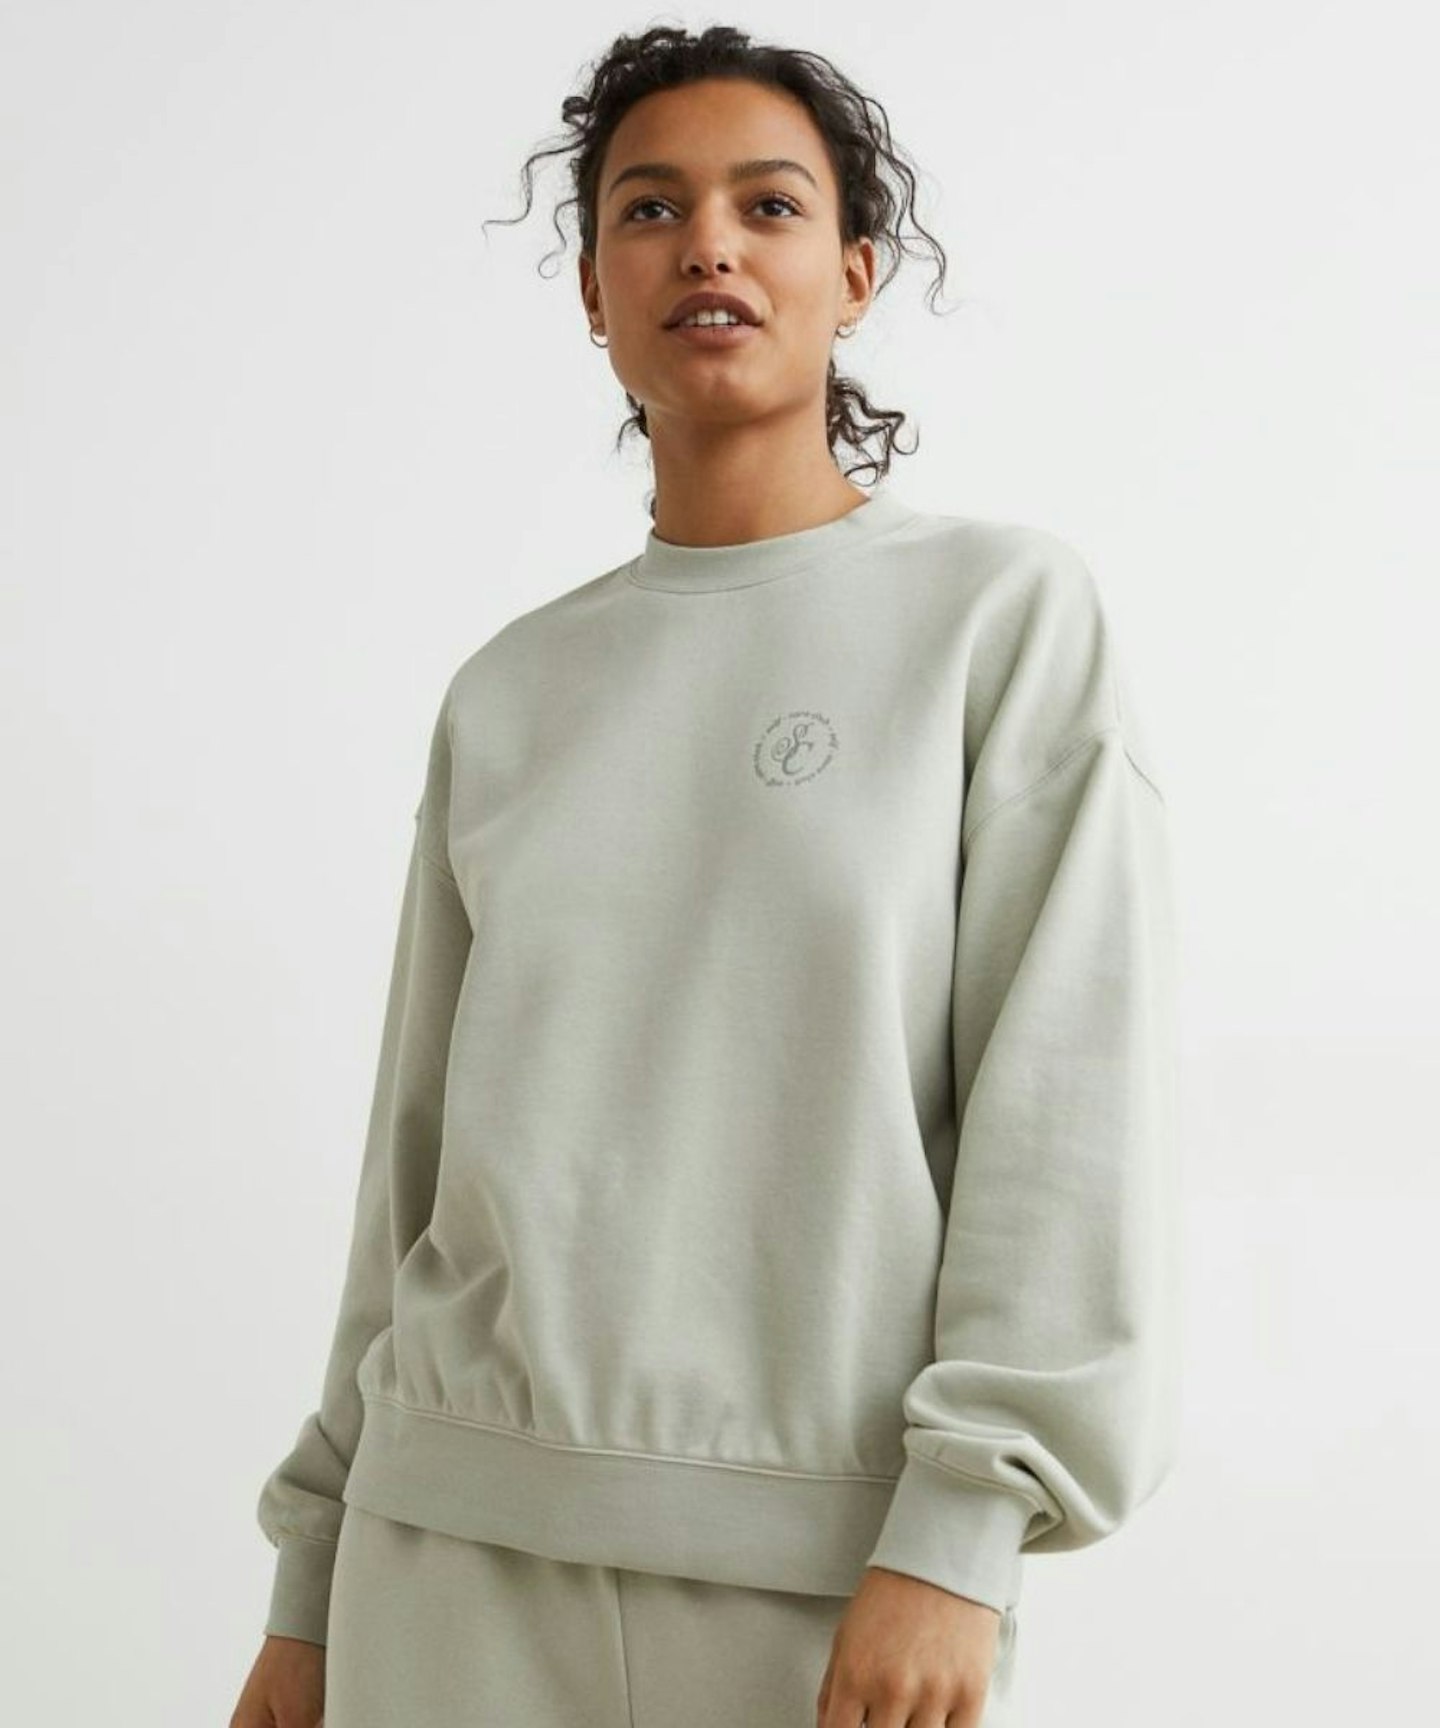 H&M Printed Sweatshirt - Sage